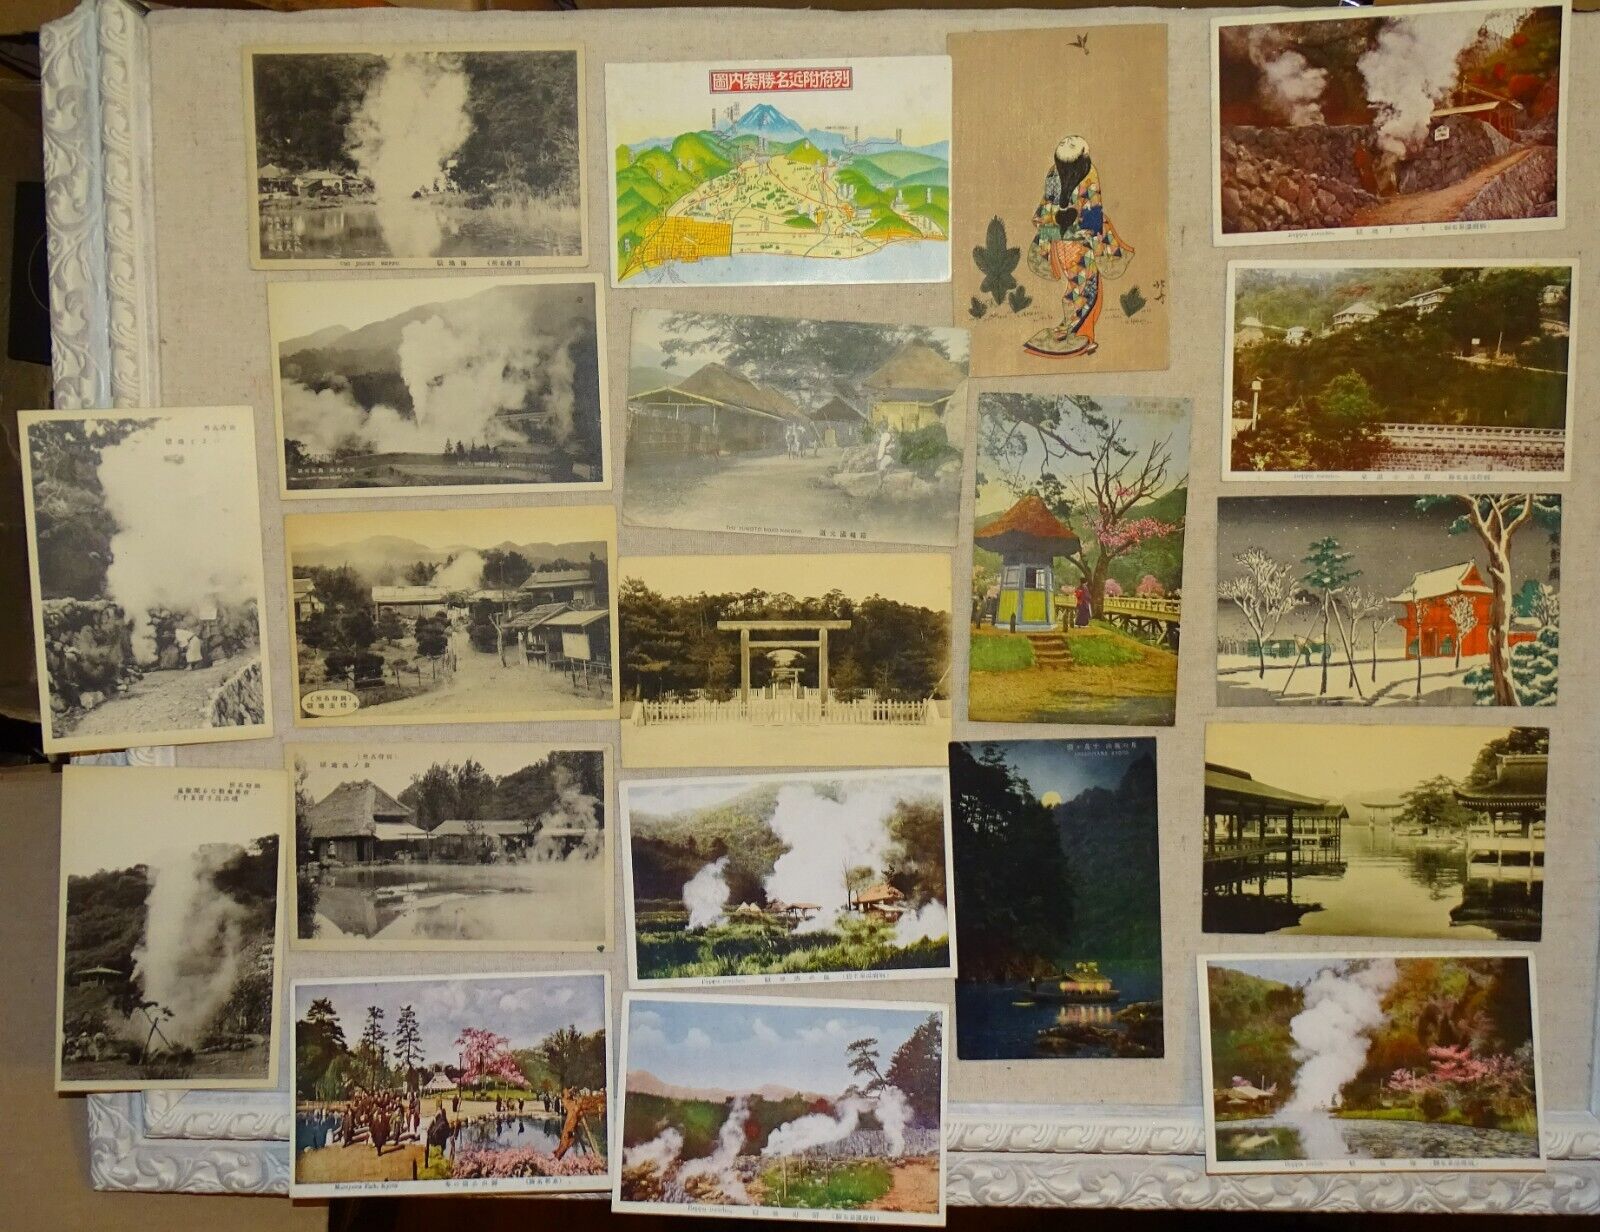 Japan, etc. - 20 Antique Postcards - Beppu, Kyoto, Hakone, Tokyo ? etc.